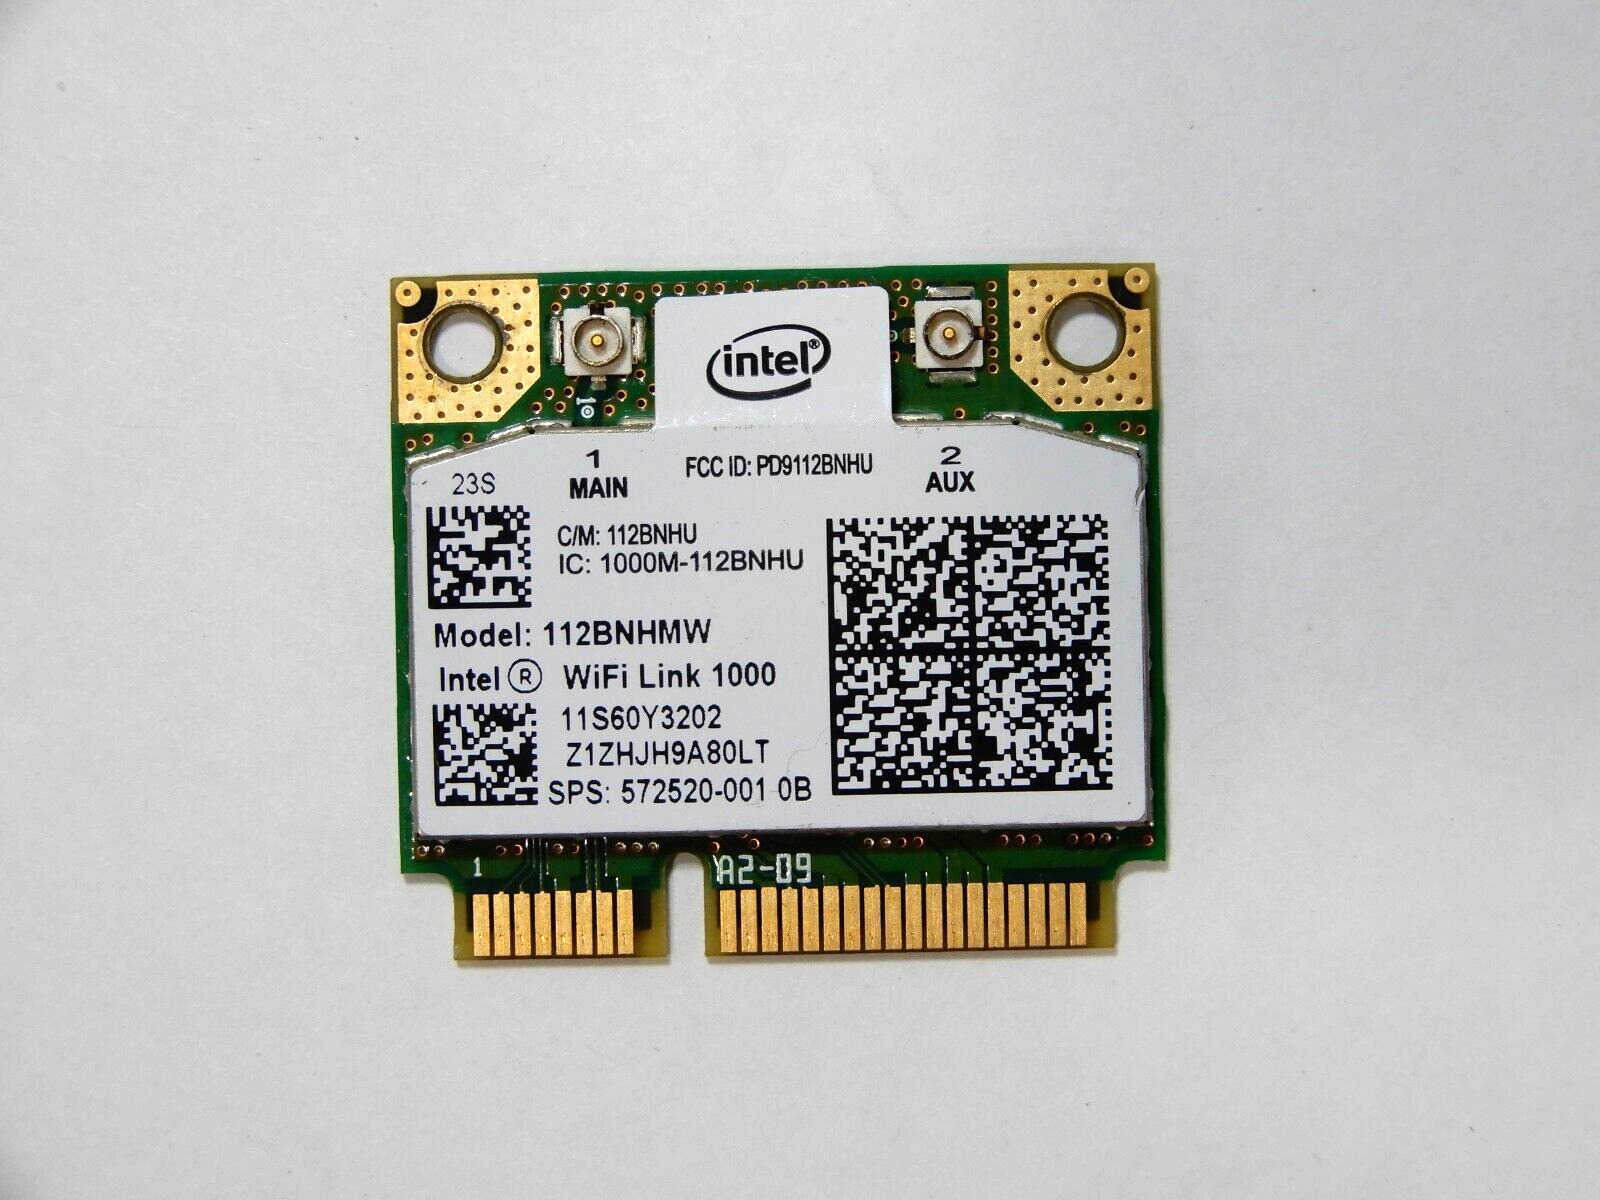 Intel Centrino WiFi Link Wireless-N 1000 (112BNHMW) 802.11b/g/n PCIe Half